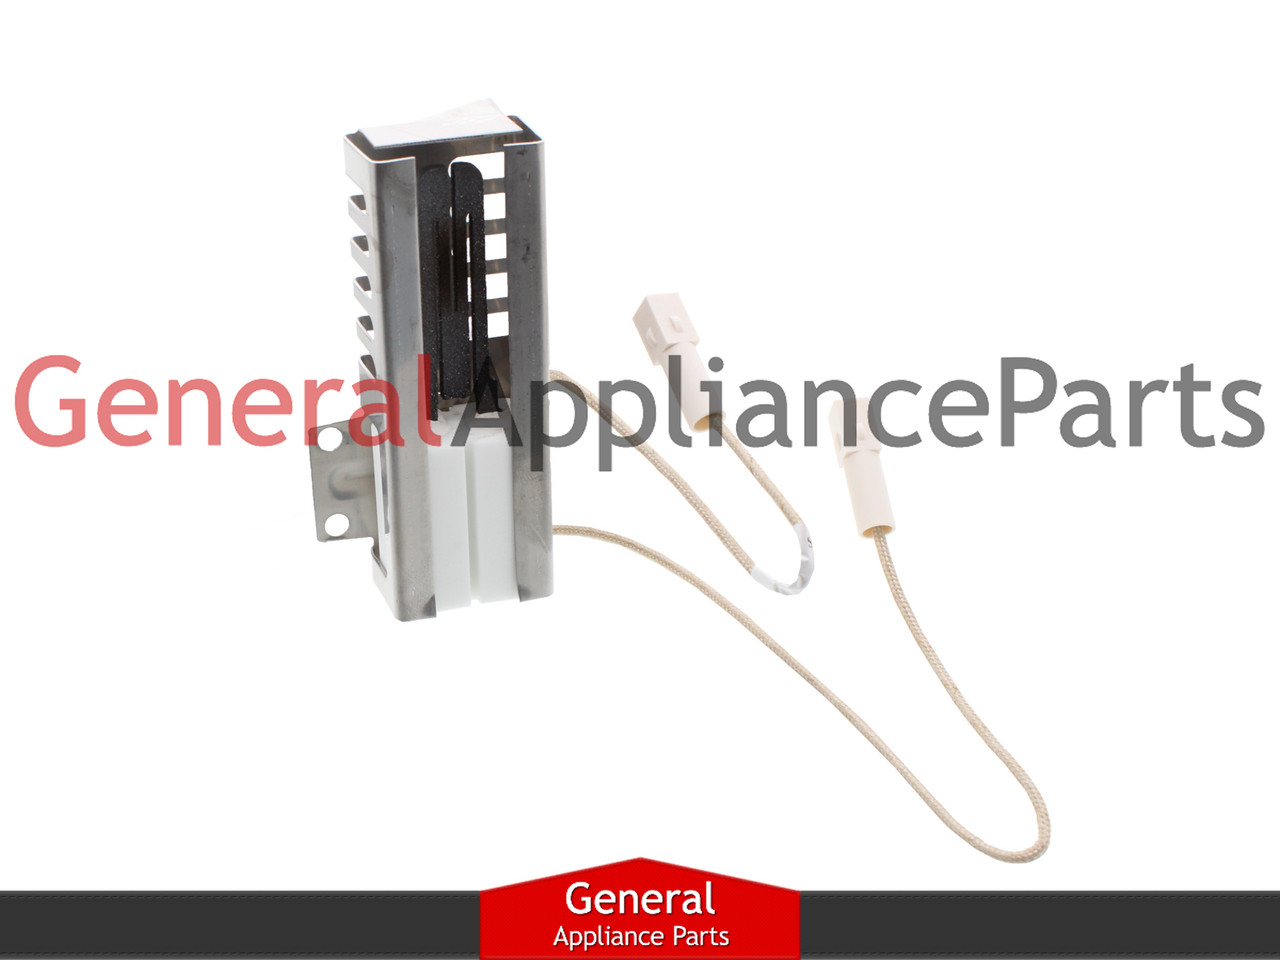 ClimaTek Oven Igniter replaces Samsung # DG94-01012A AP5967723 PS11720750 -  General Appliance Parts